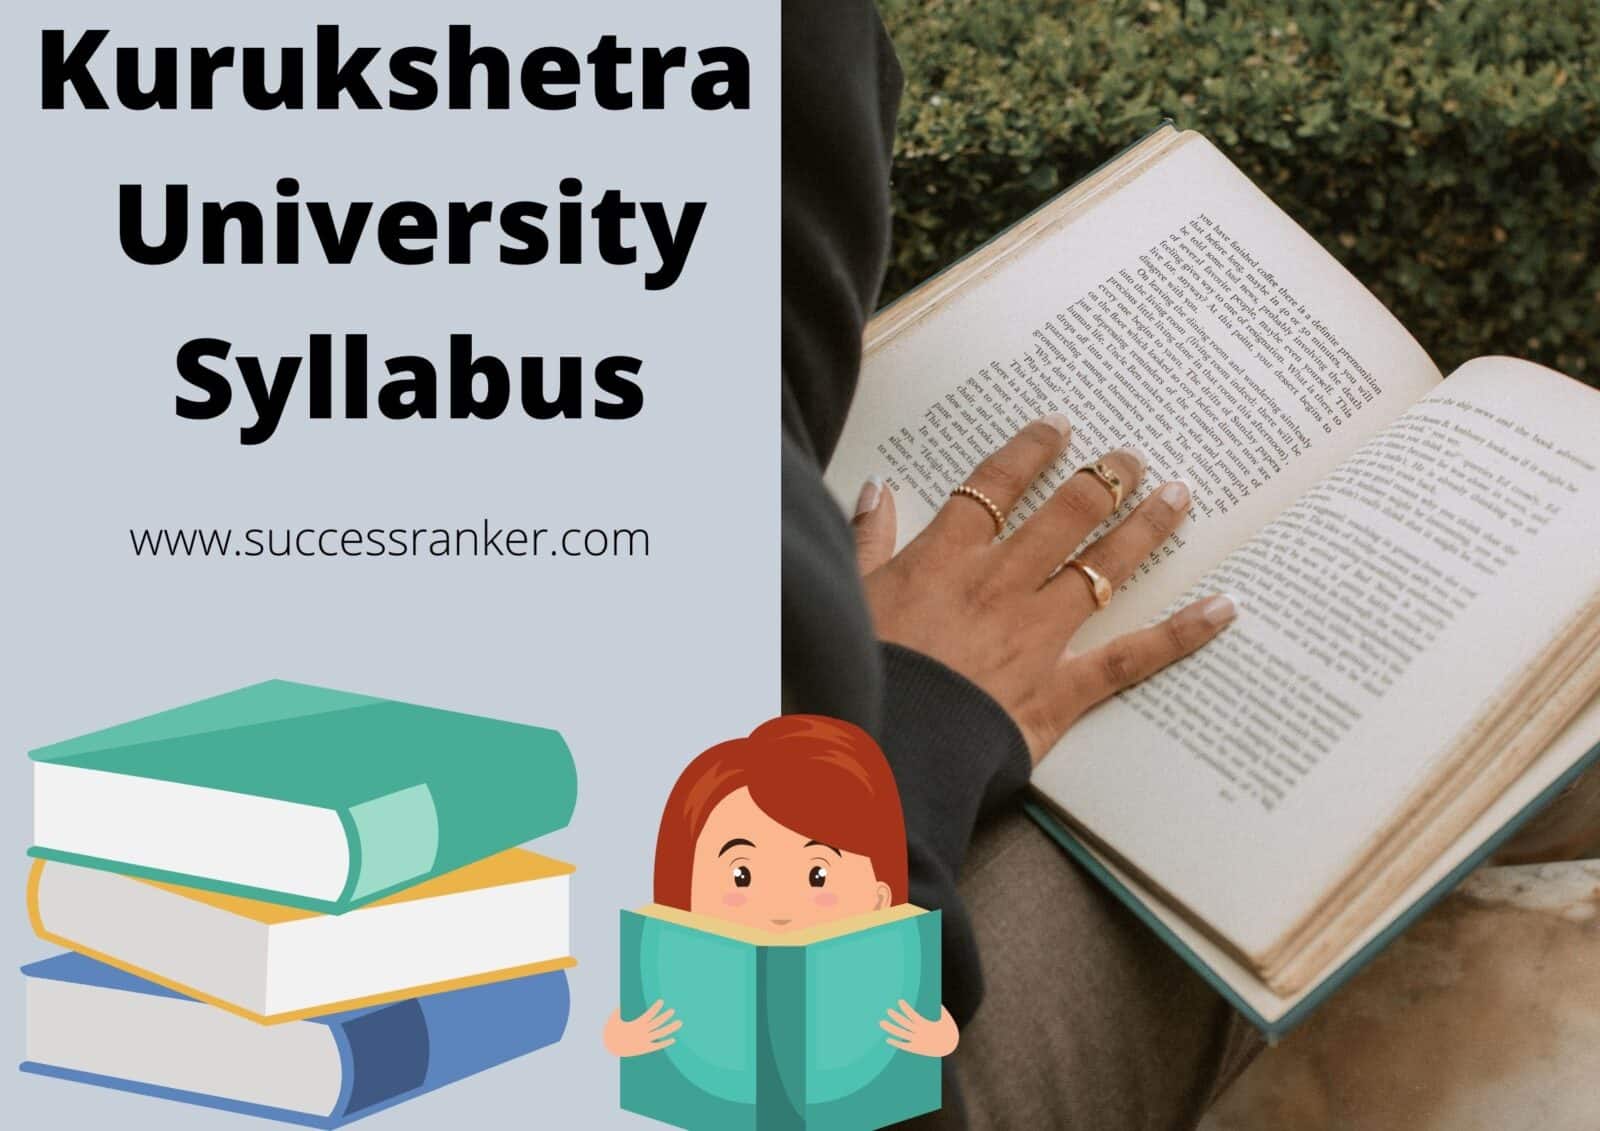 Kurukshetra University Syllabus